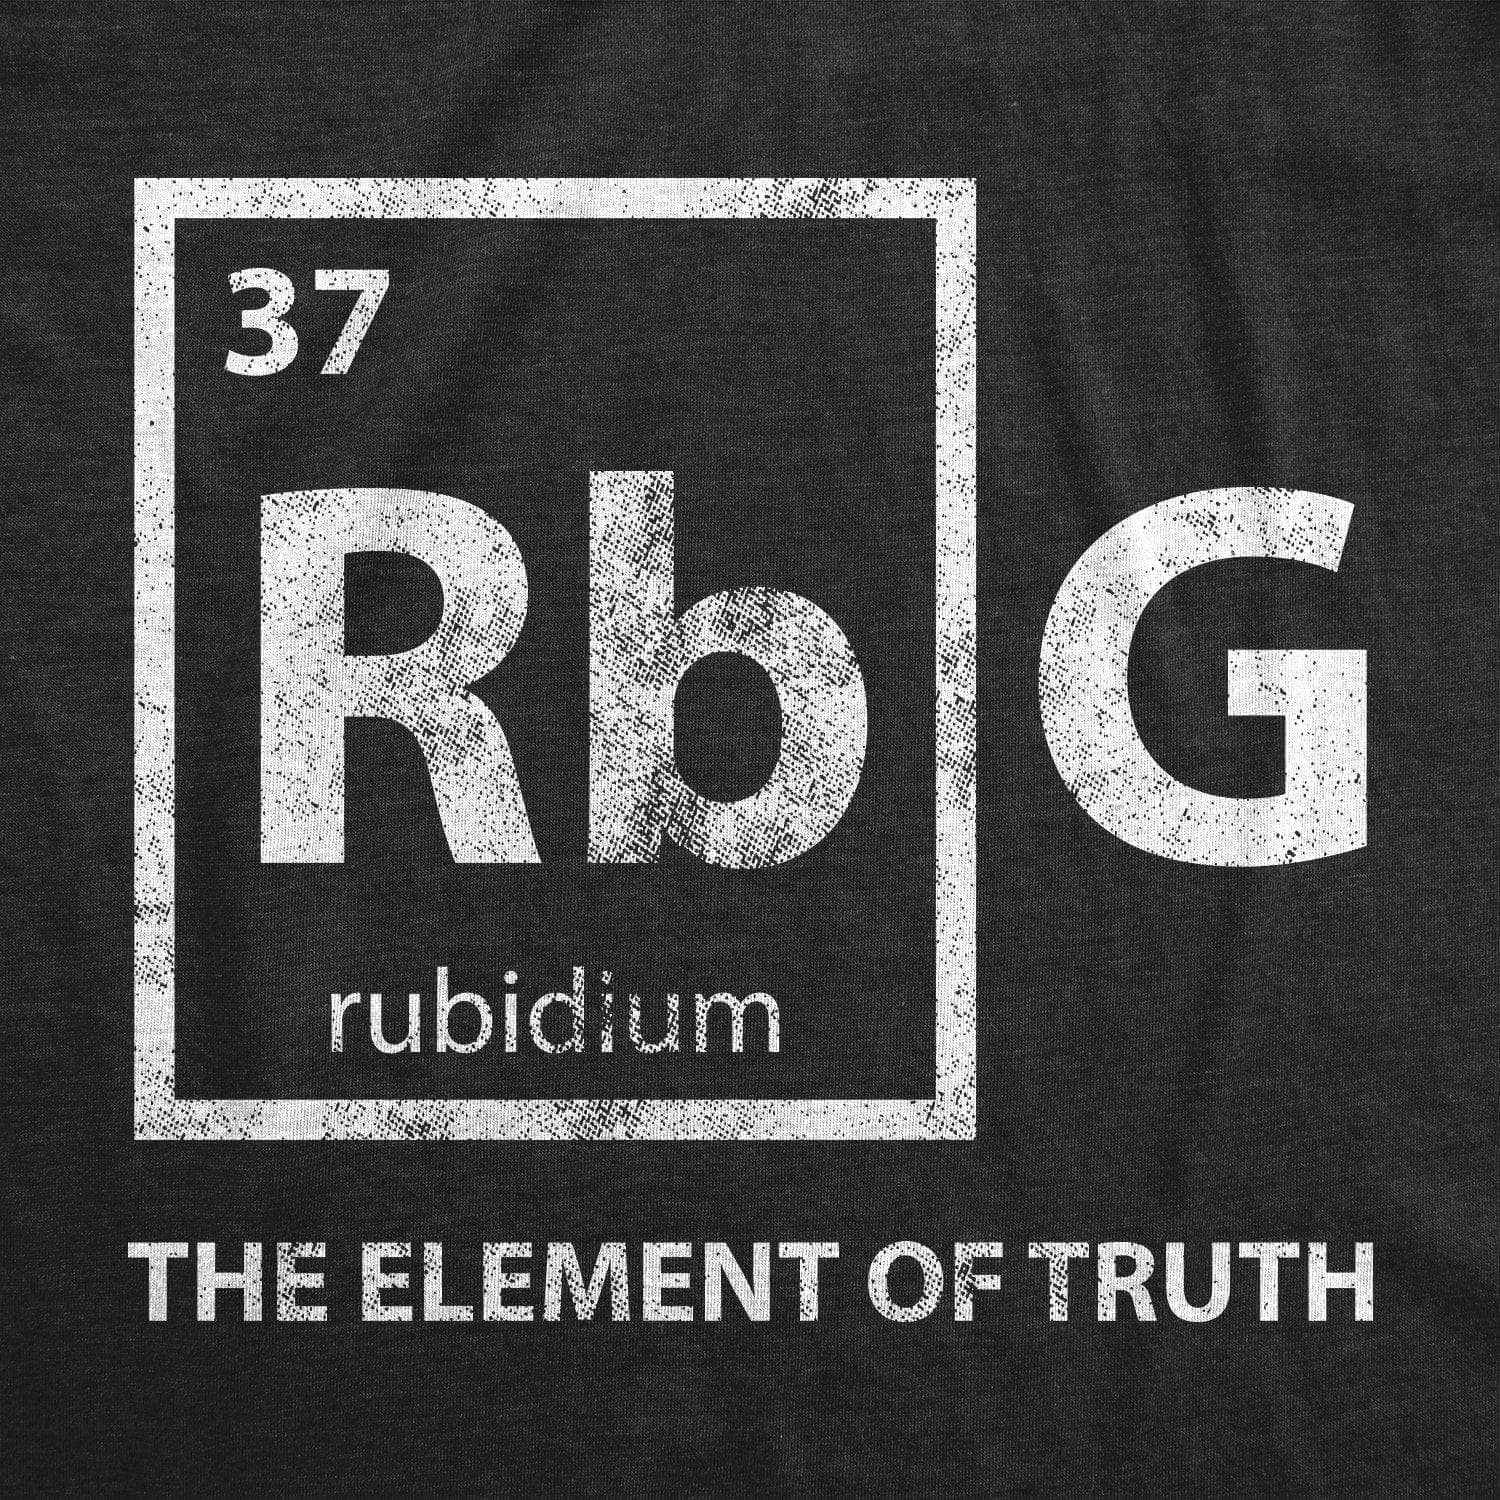 RBG Element Of Truth Men's Tshirt - Crazy Dog T-Shirts